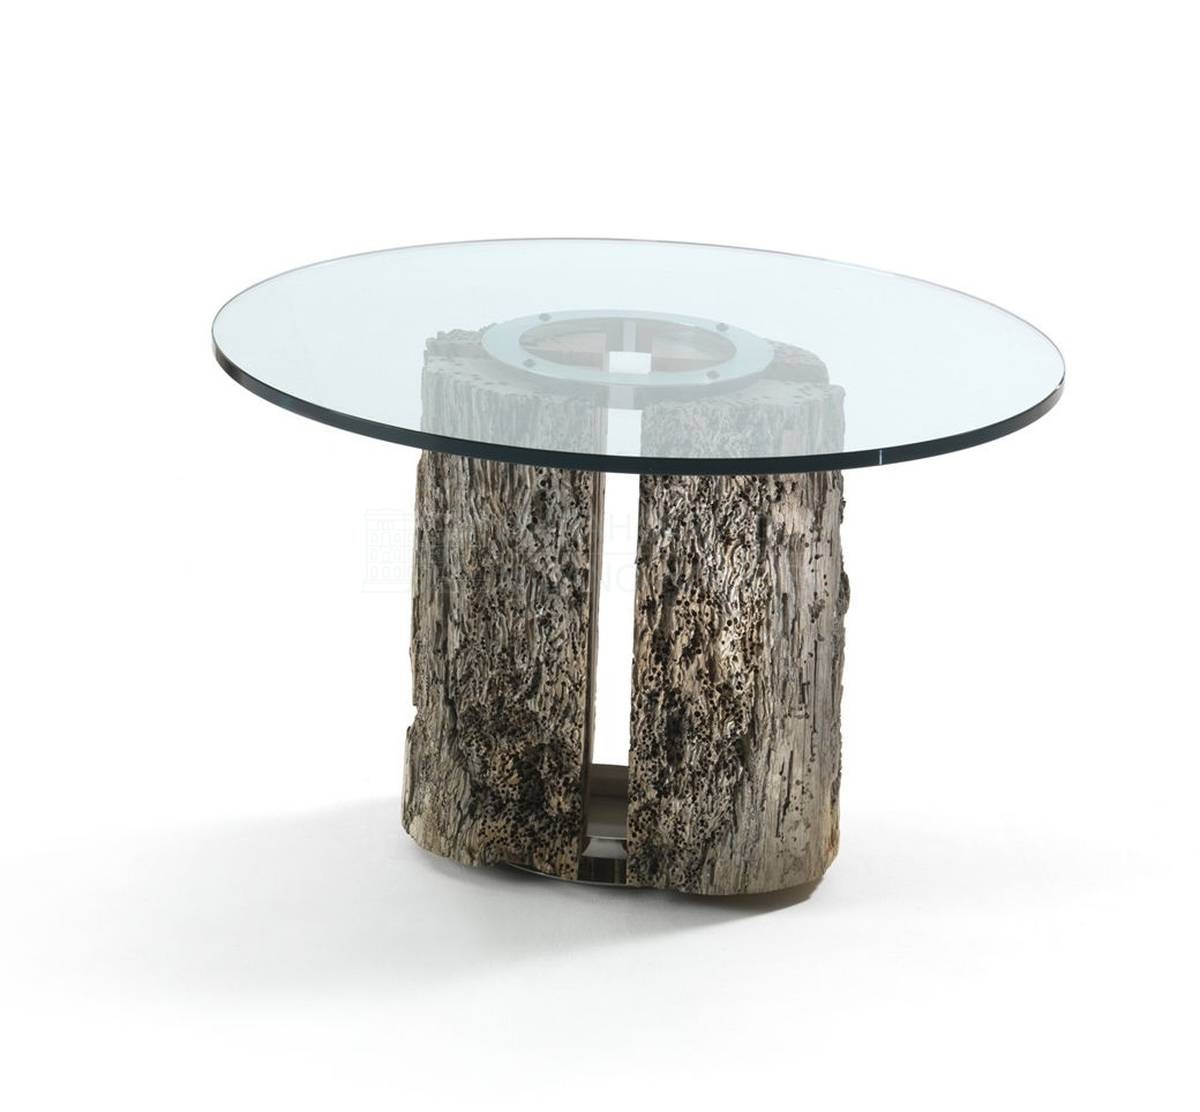 Кофейный столик Vice /small table из Италии фабрики RIVA1920